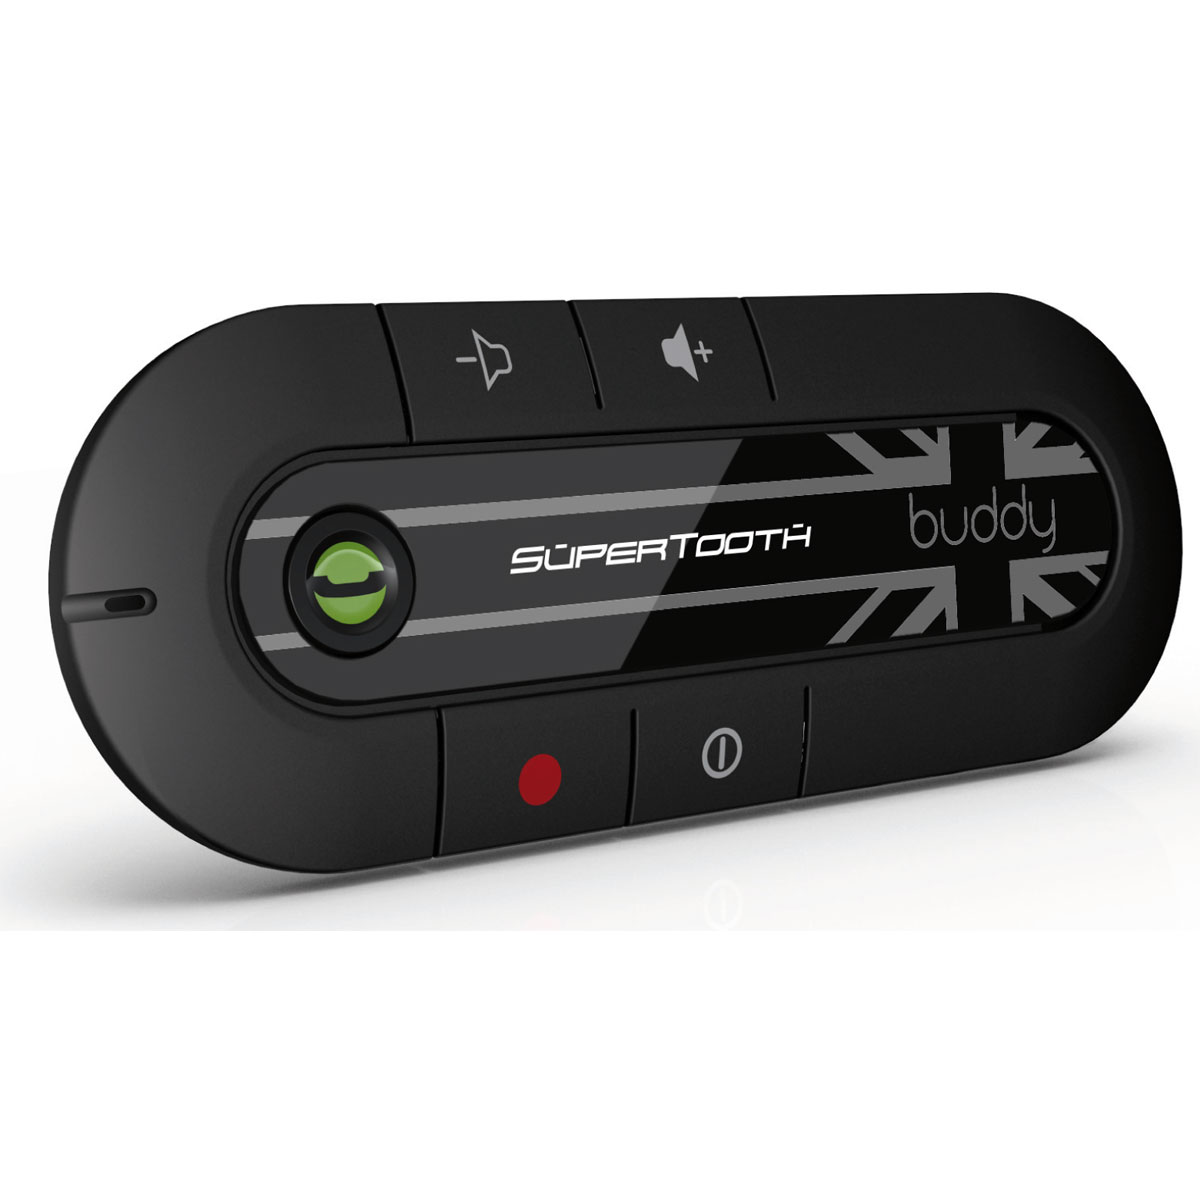 Supertooth Buddy - Kit Bluetooth voiture - Oreillette et Kit mains